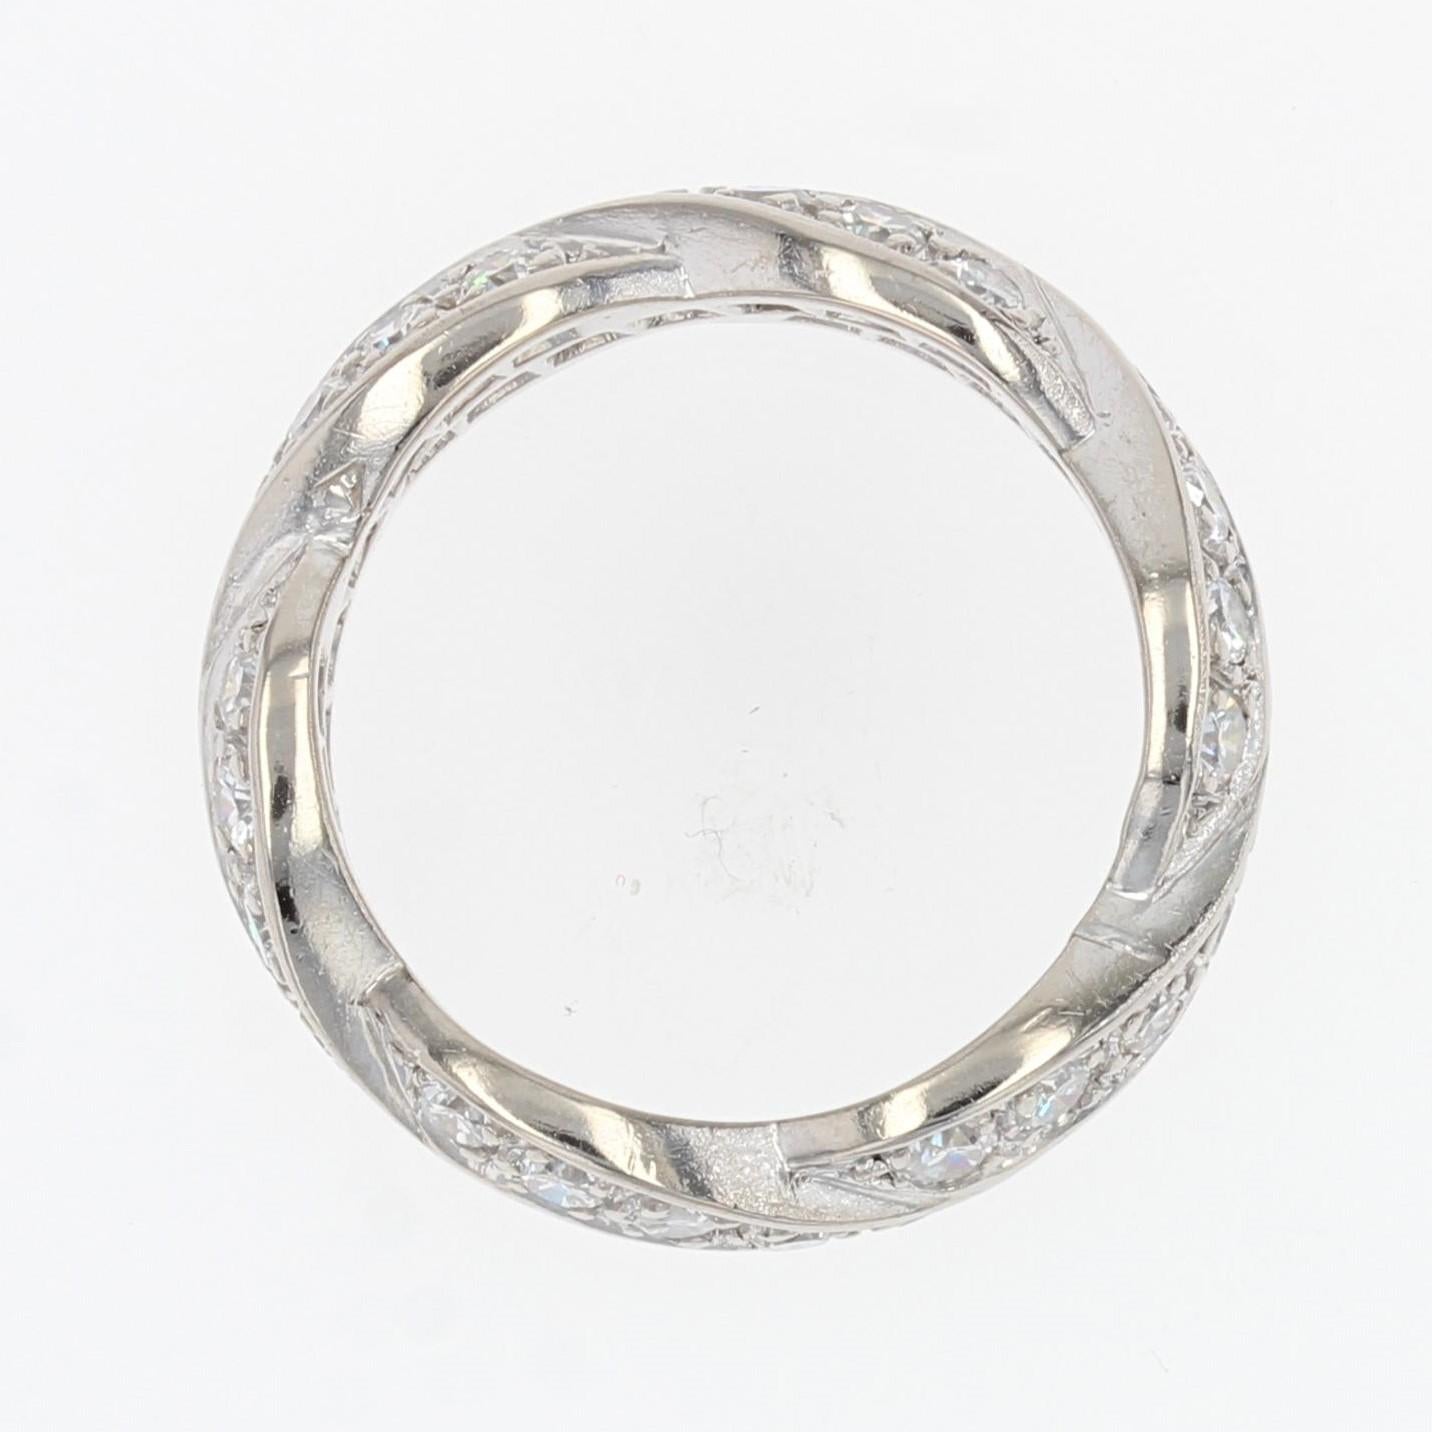 French 1950s Diamonds 18 Karat White Gold Twist Wedding Ring For Sale 4